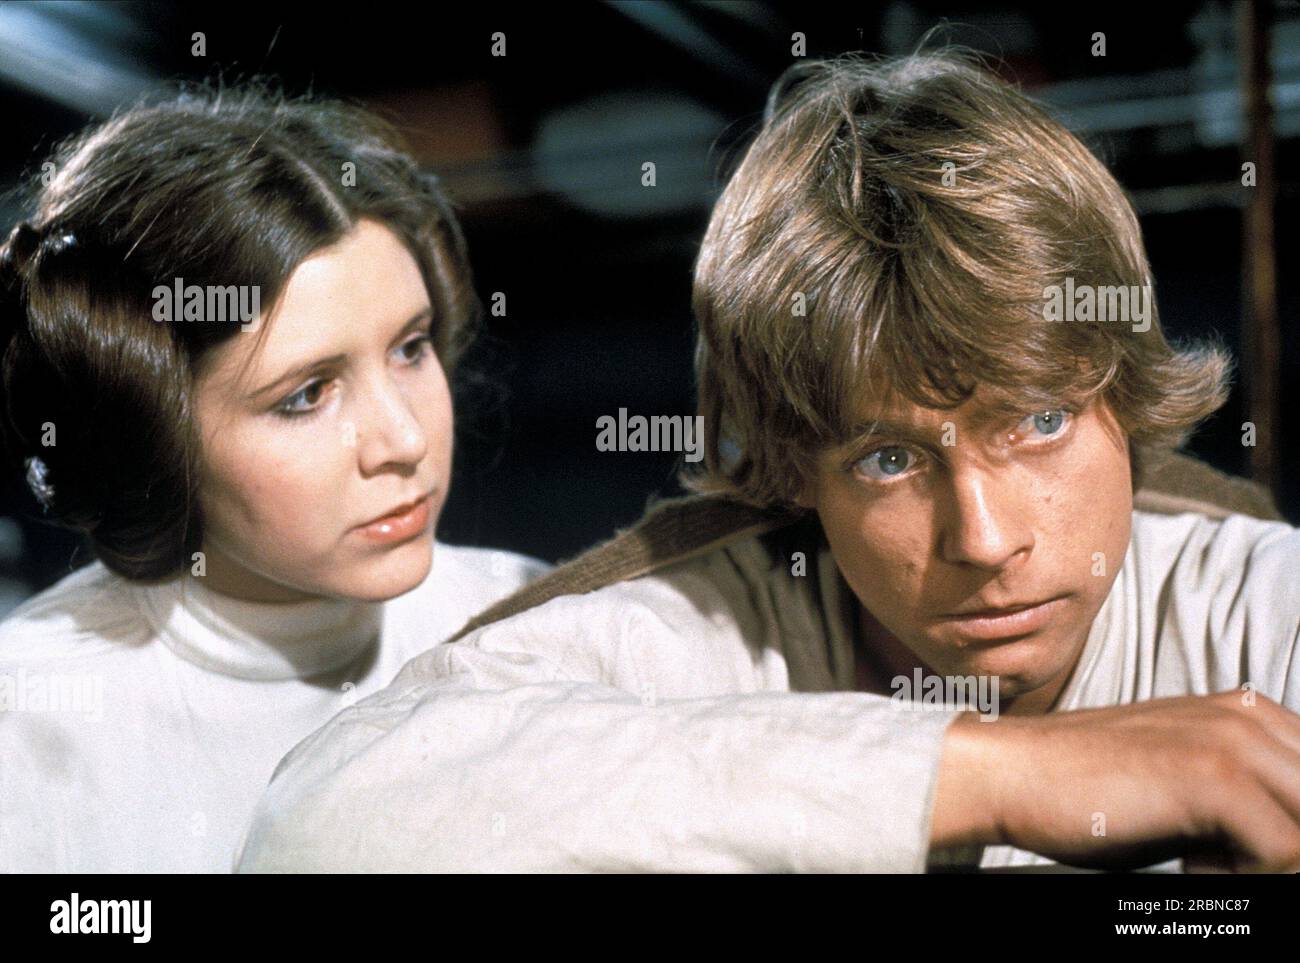 Star Wars Star Wars episodio IV : Una nuova speranza Carrie Fisher & Mark Hamill Principessa Leia & Luke Skywalker Foto Stock